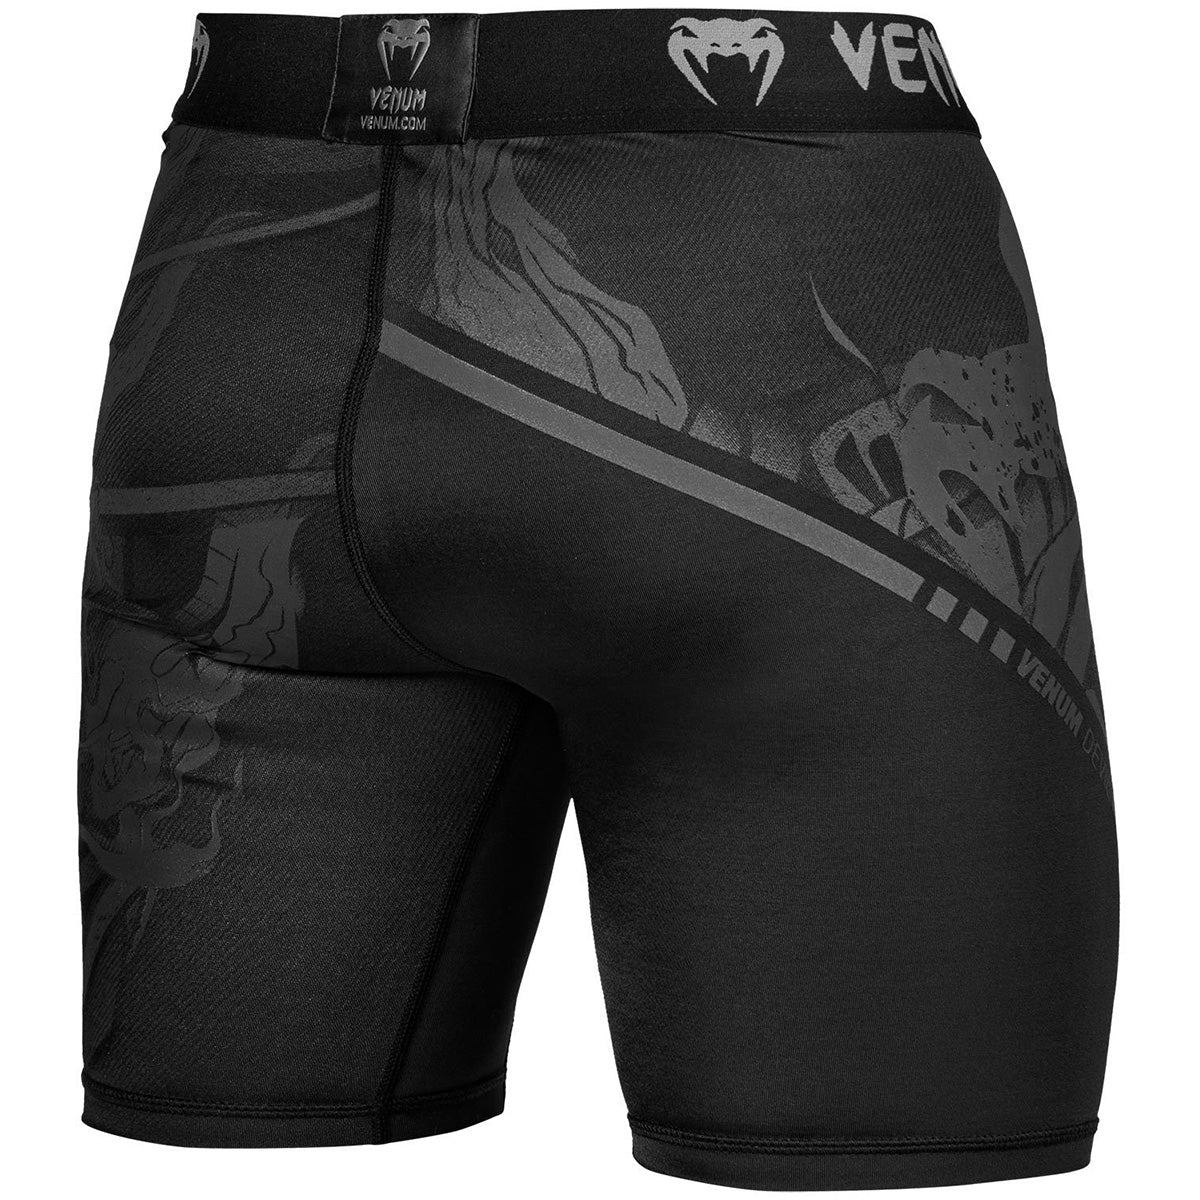 Venum Devil MMA Compression Shorts - Black/Black Venum